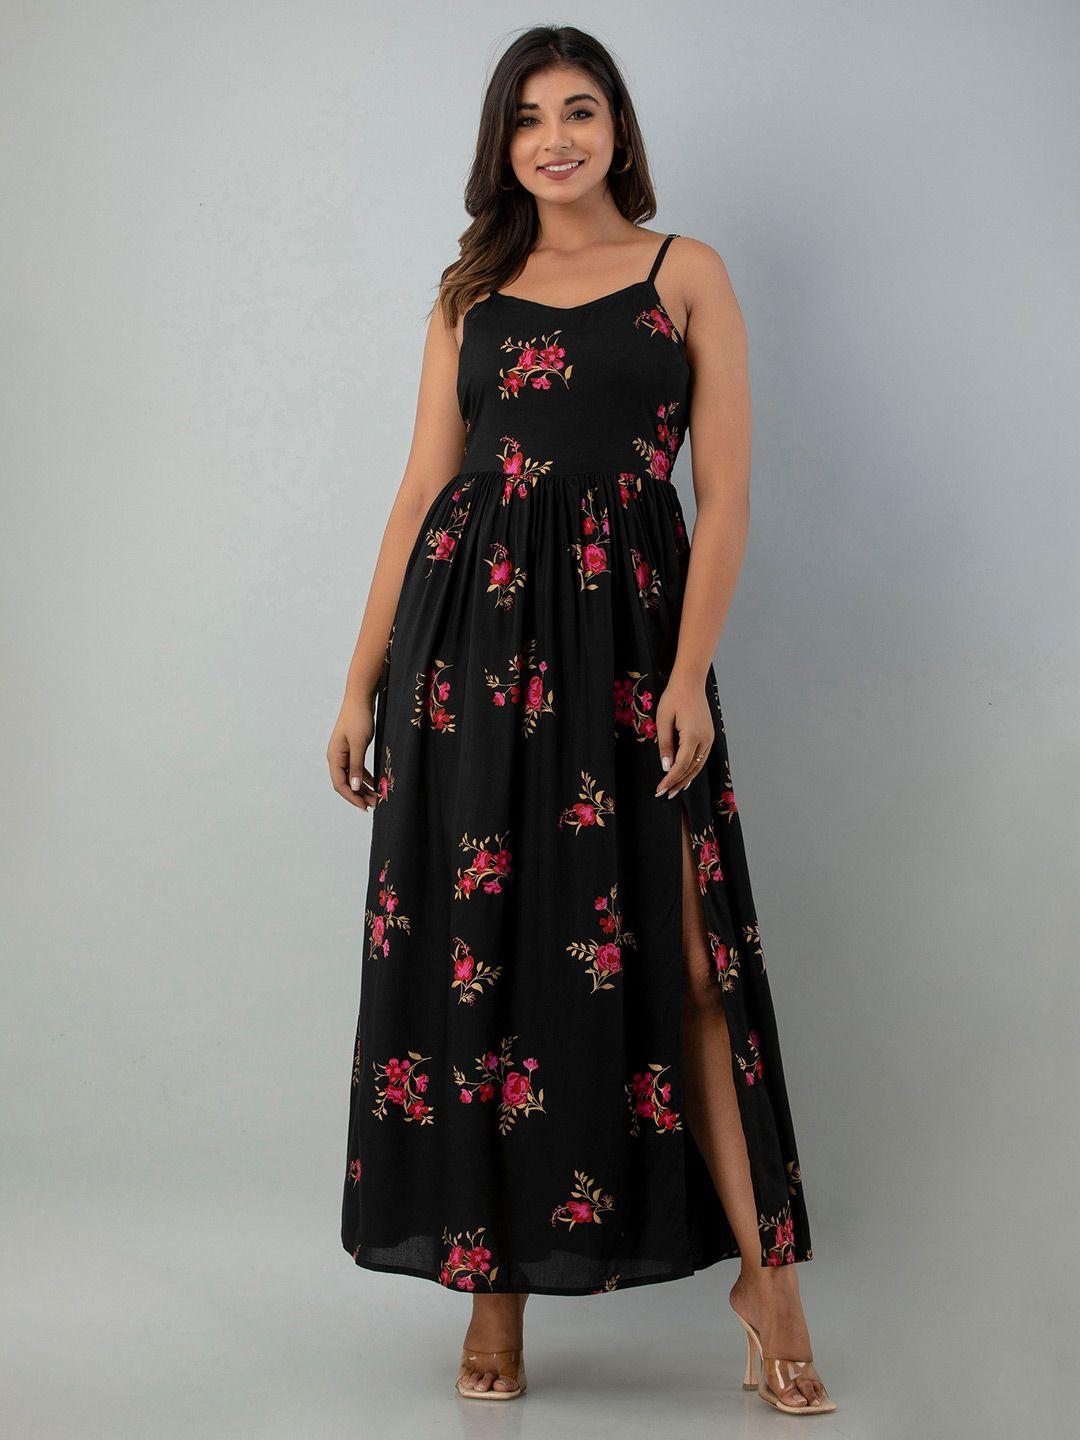 indianic floral print maxi dress